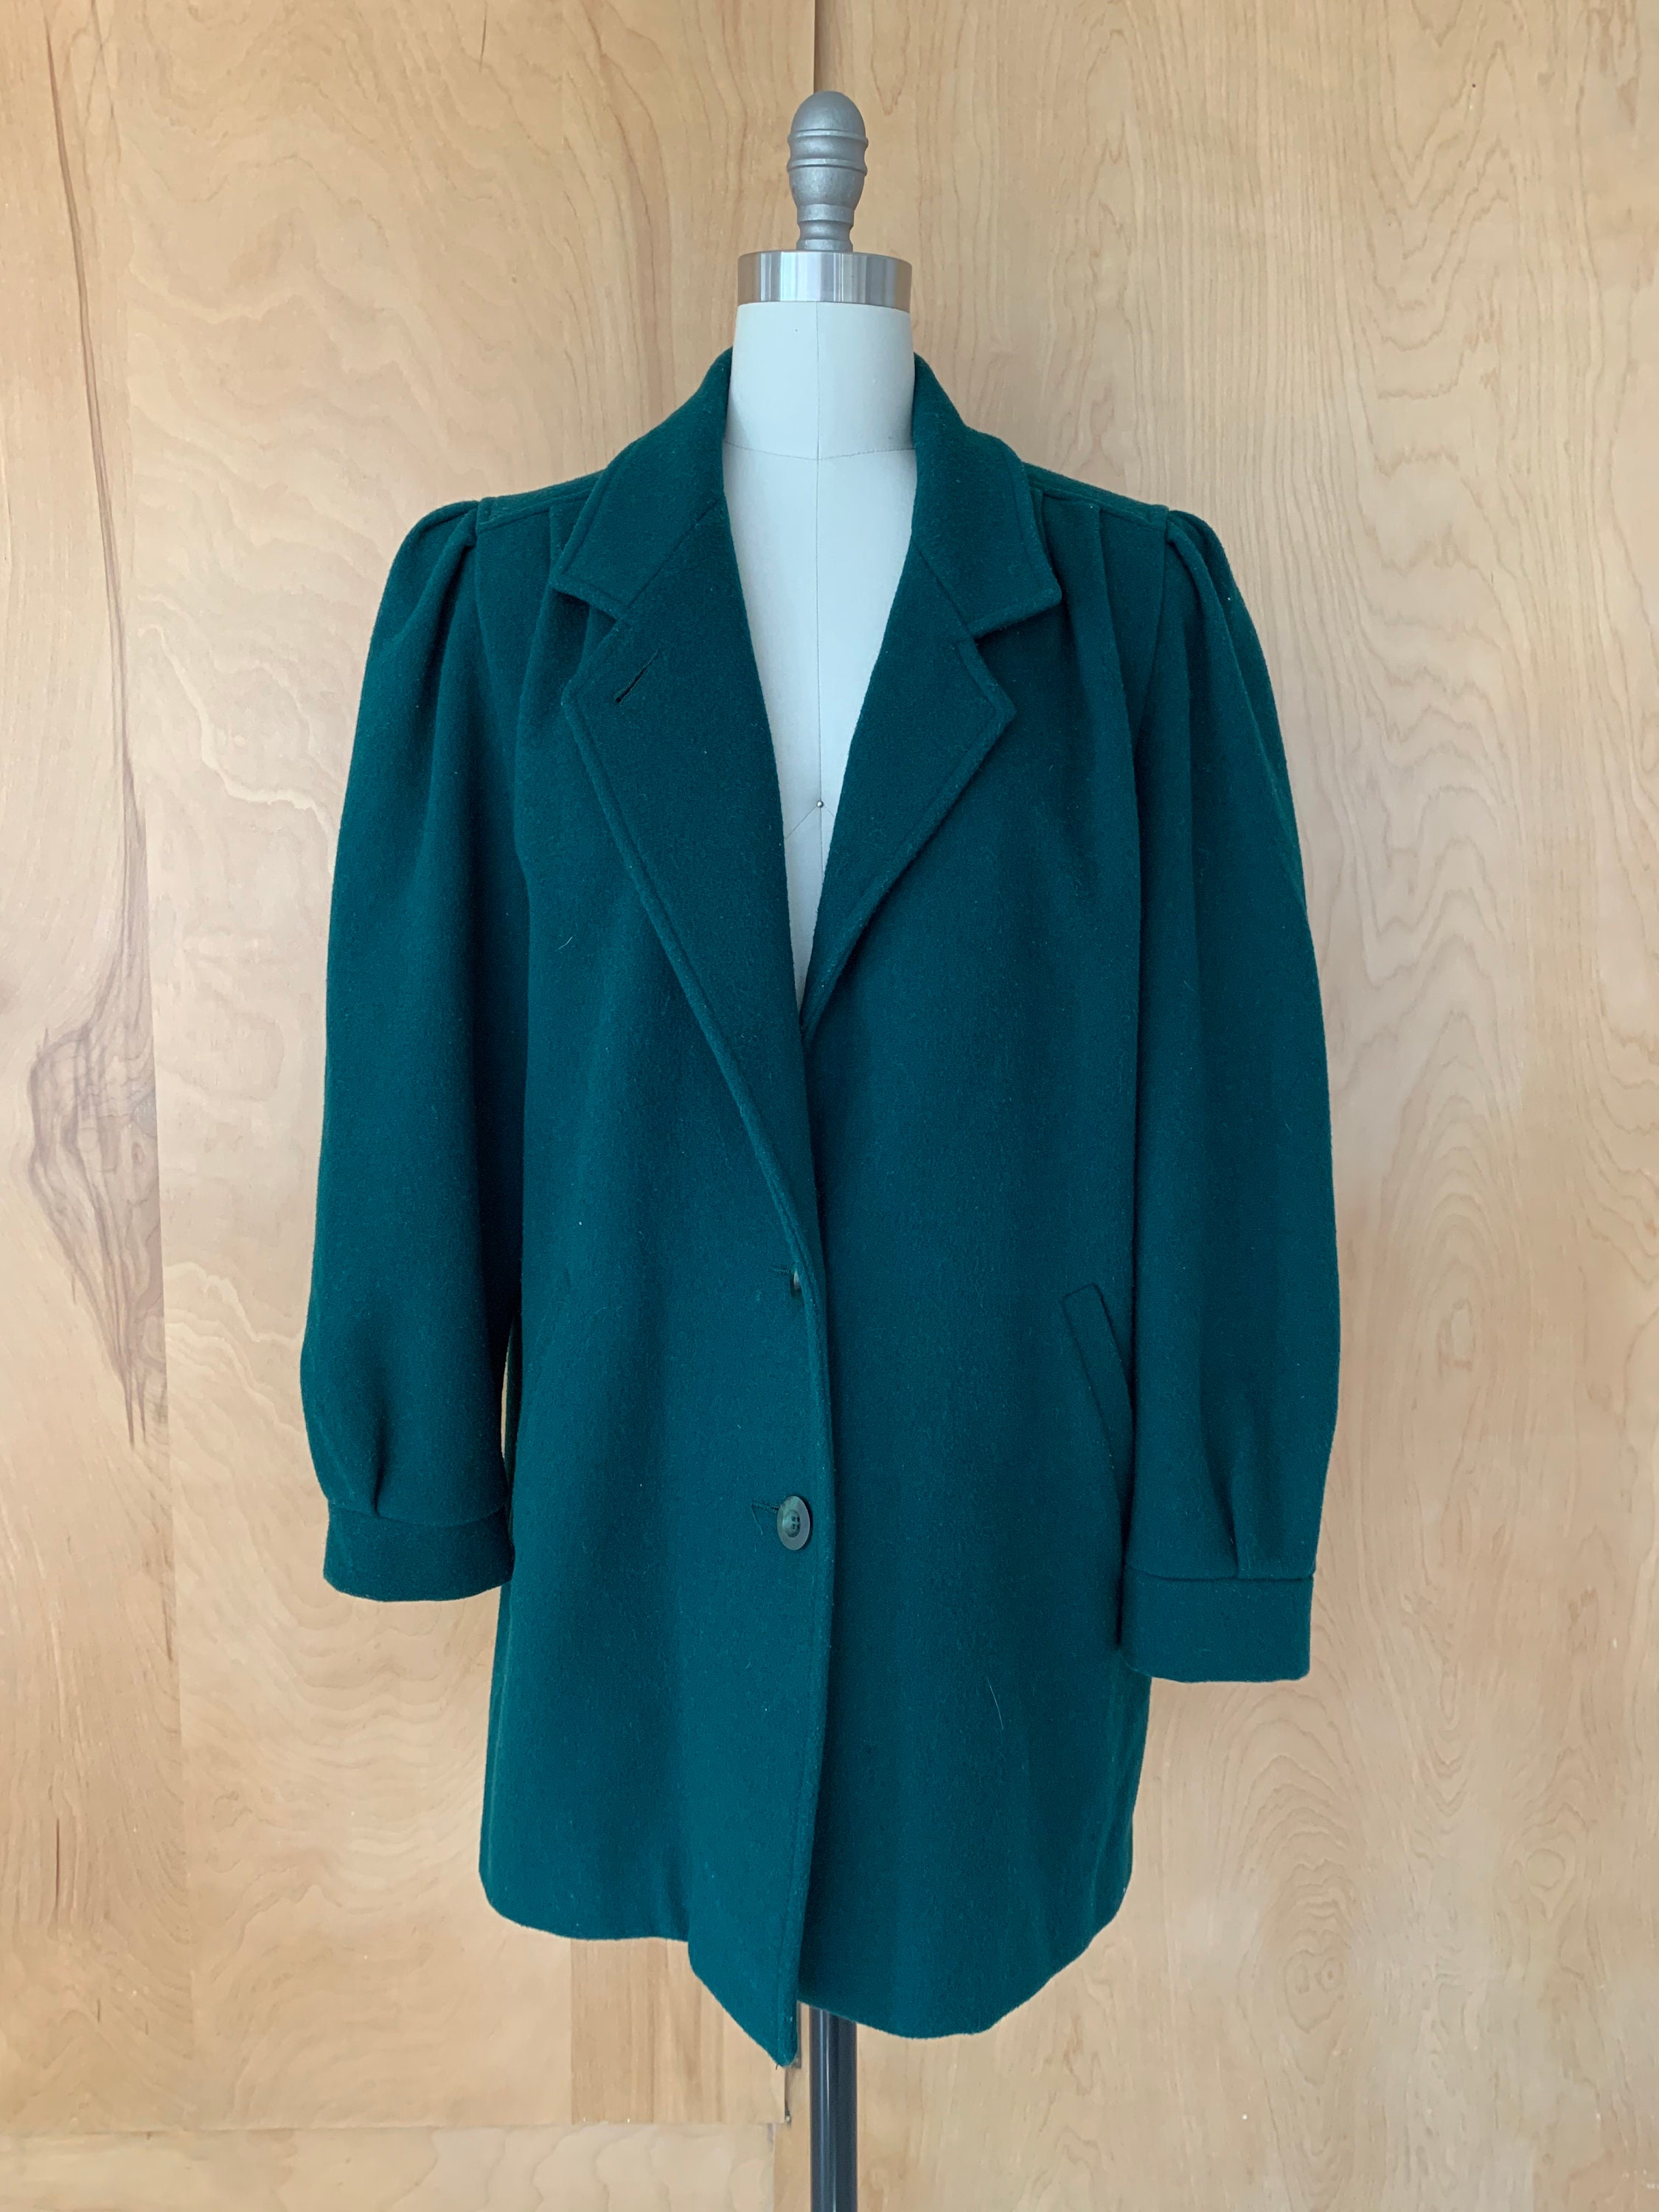 KARIZMA Dark green oversized short coat / wool / oversized | Etsy